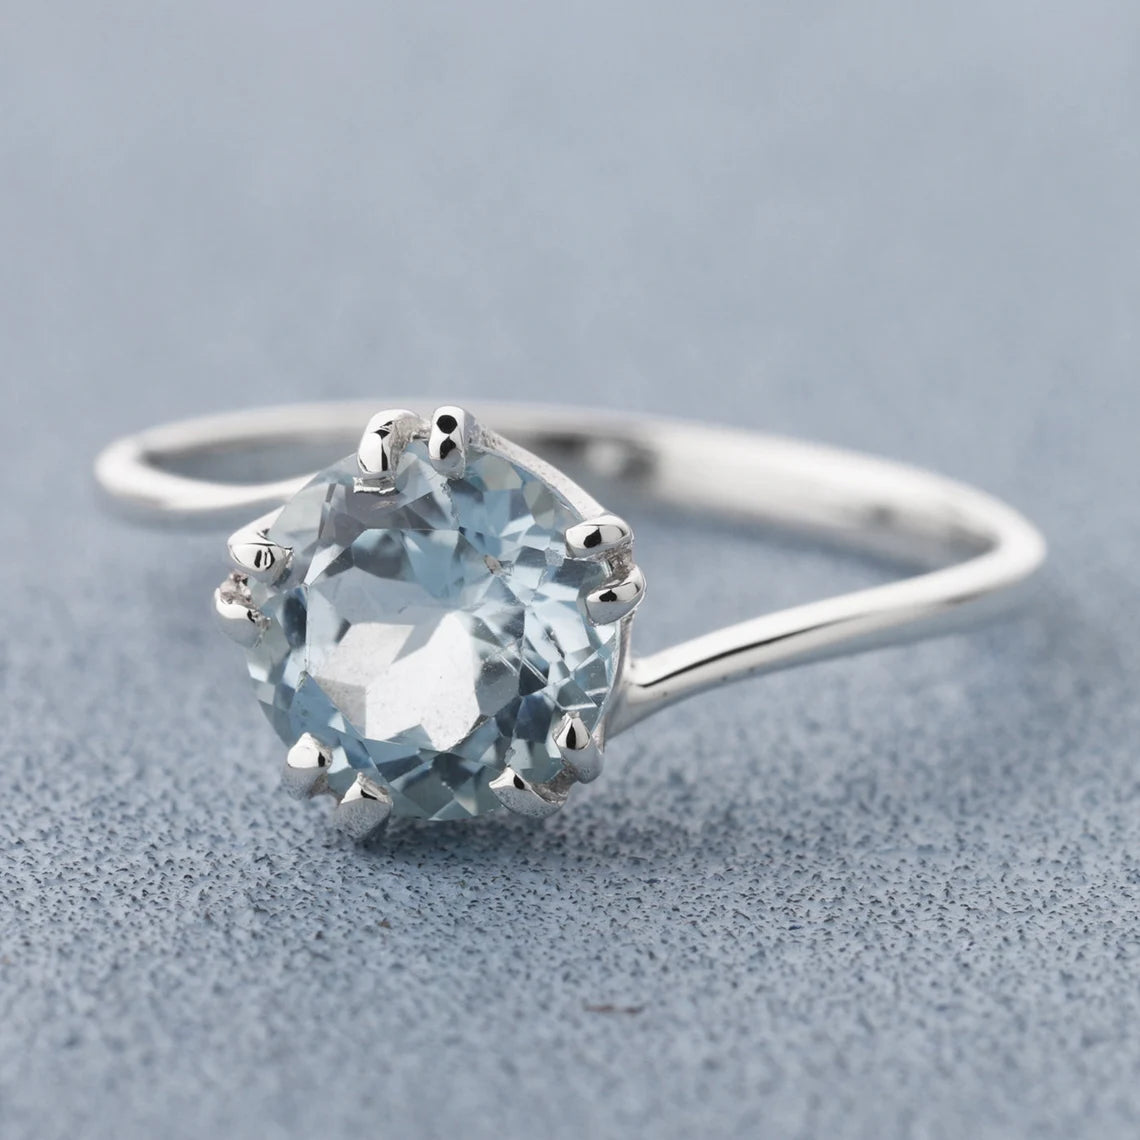 Blue Topaz Ring - Gemstone Ring - Sterling Silver Ring - Round Blue Topaz Ring - Prong Ring - Engagement Ring - Wedding Ring - Promise Ring